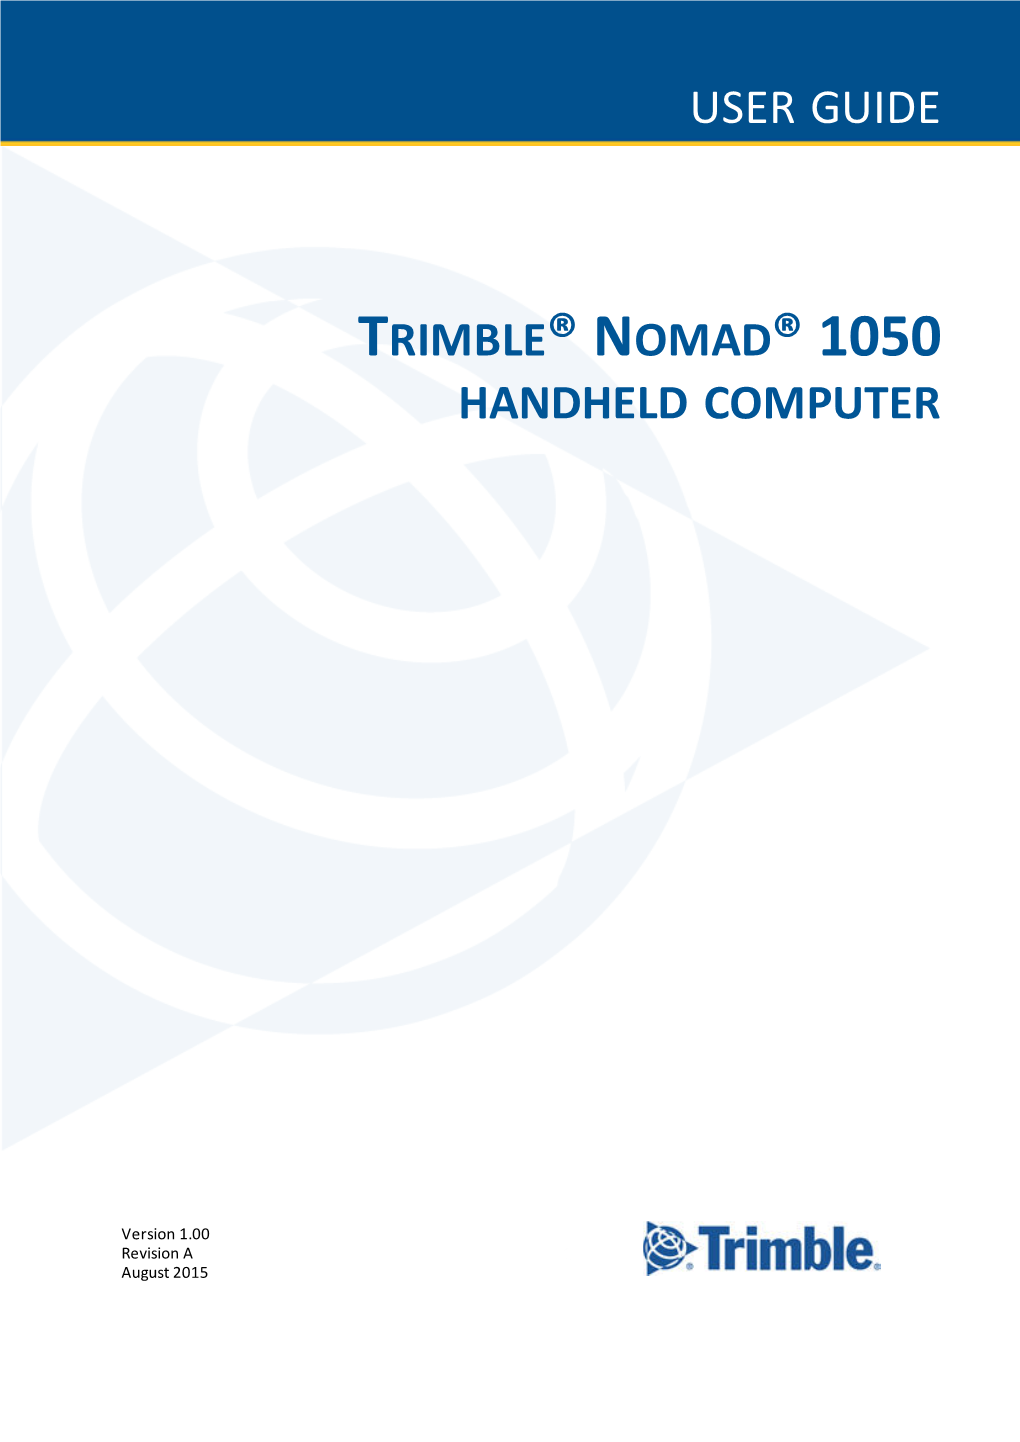 Trimble Nomad 1050 Handheld Computer User Guide